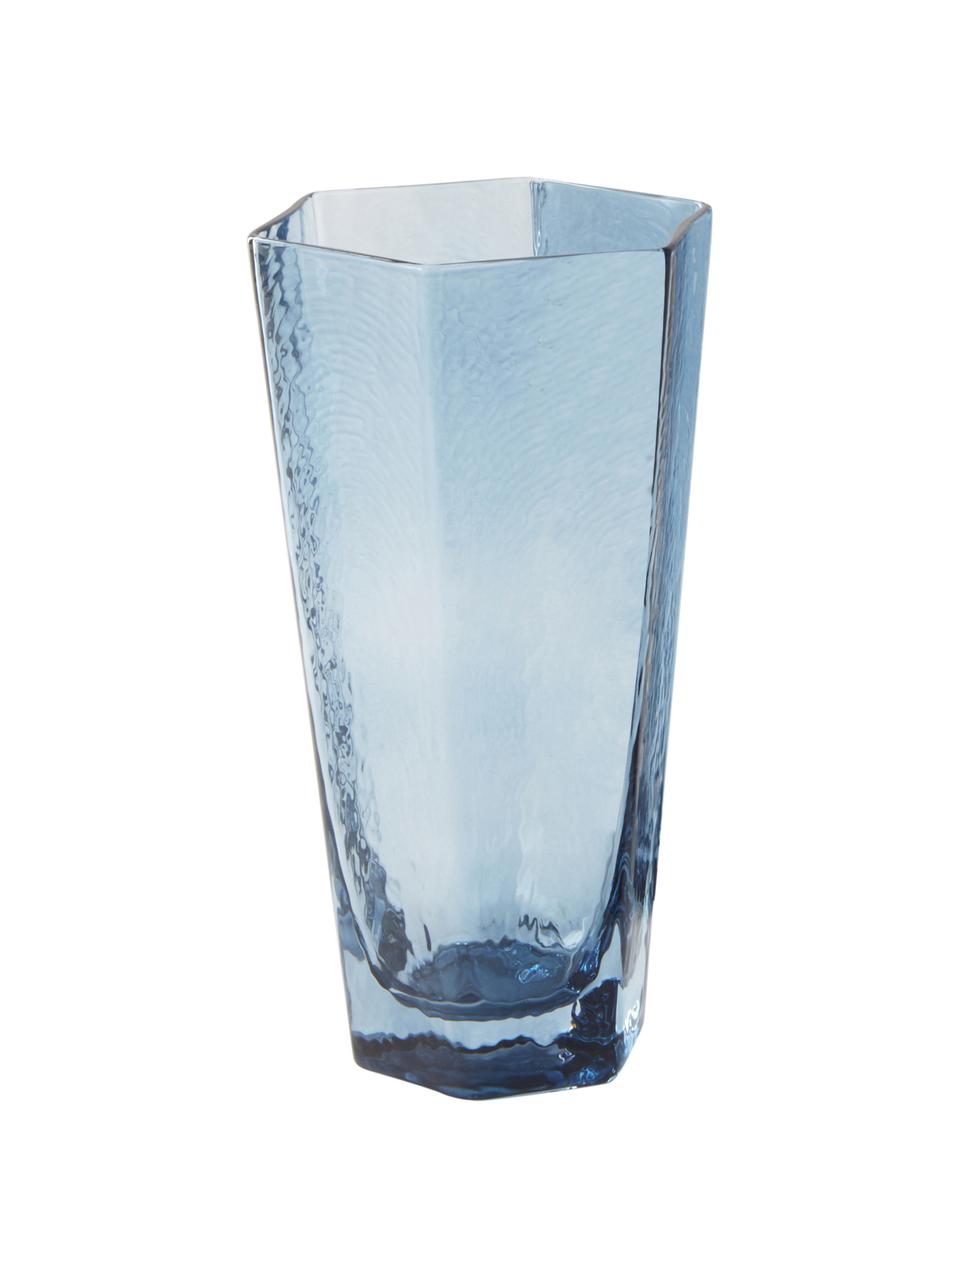 Wassergläser Amory in Blau, 4 Stück, Glas, Blau, transparent, Ø 9 x H 17 cm, 500 ml